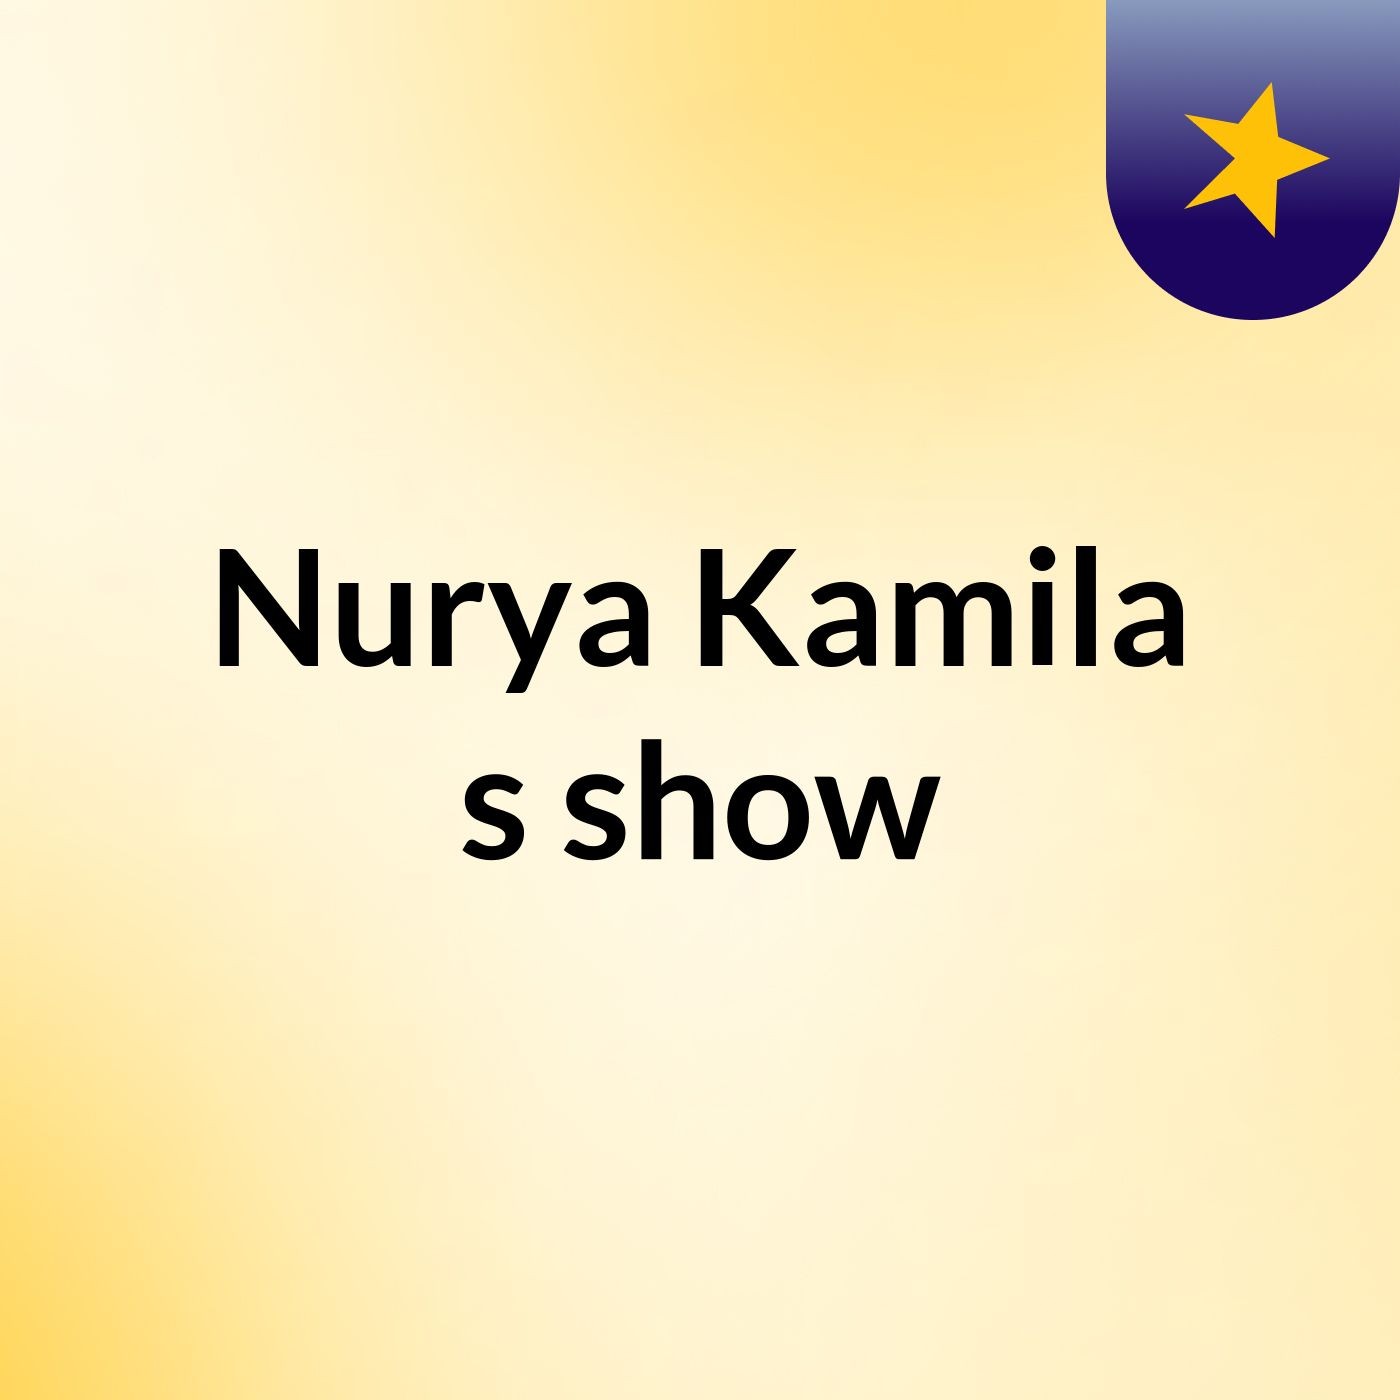 Nurya Kamila's show